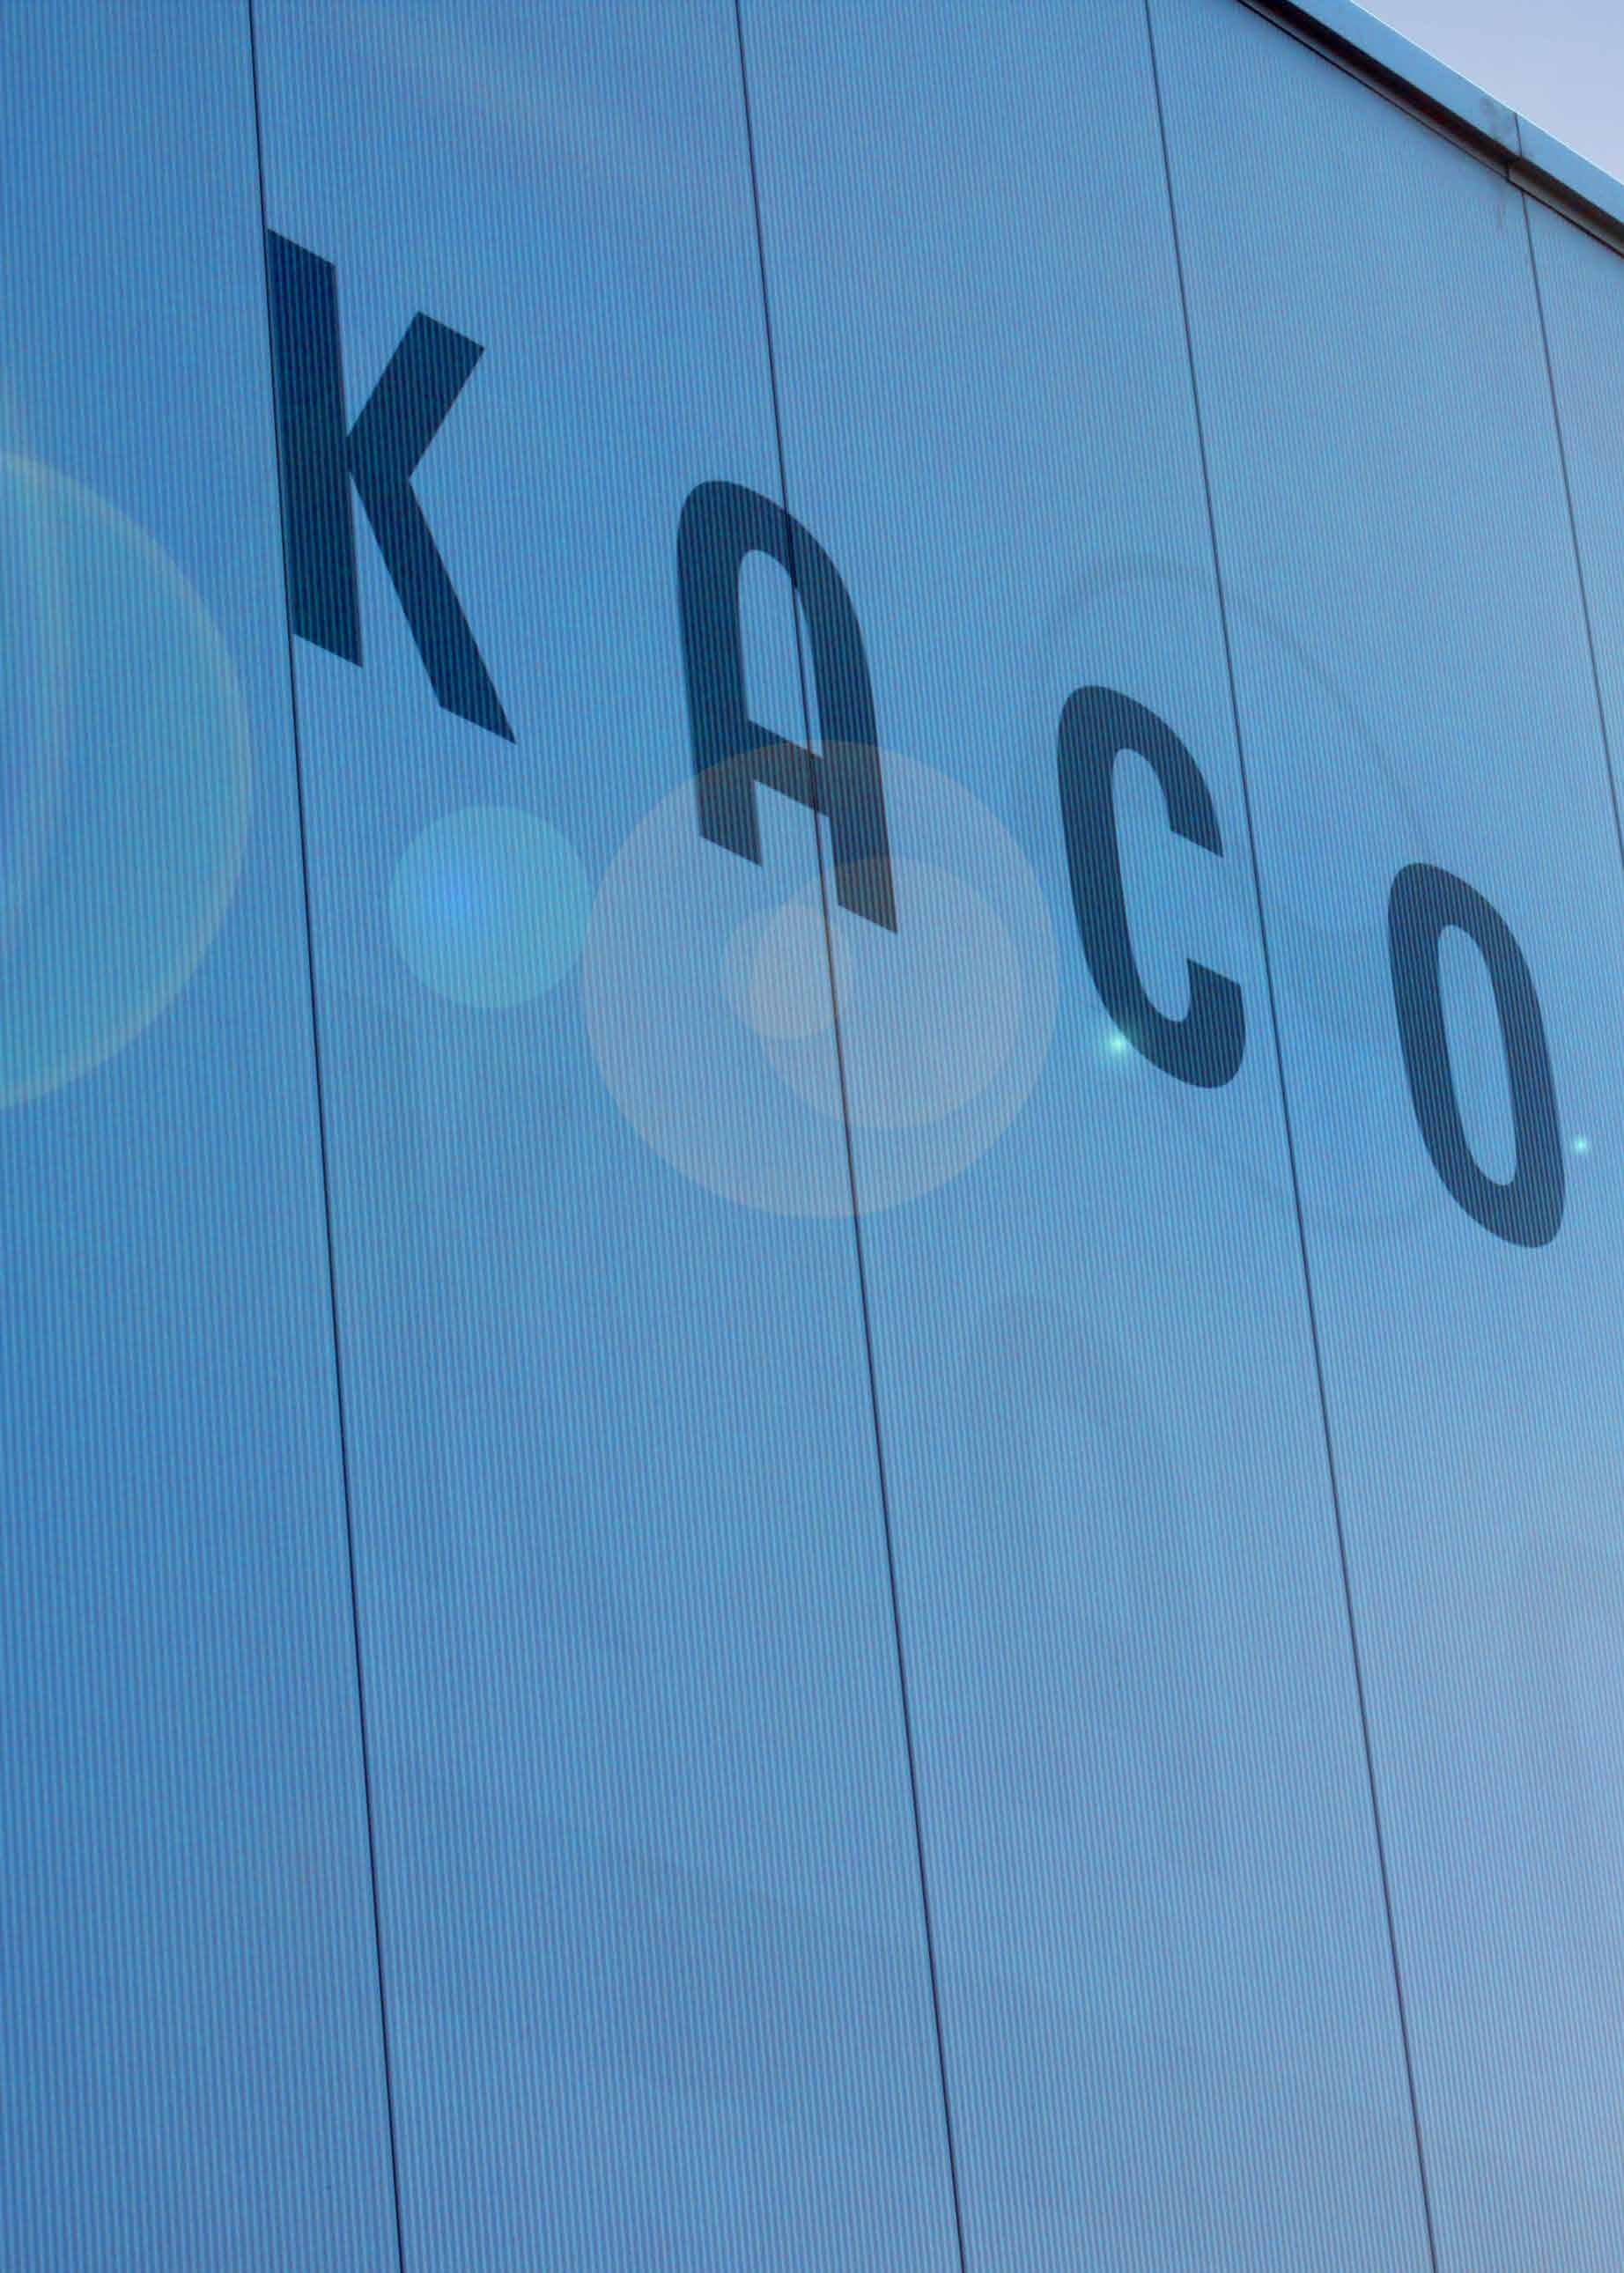 Impressum Herausgeber und Redaktion KACO new energy GmbH www.kaco-newenergy.